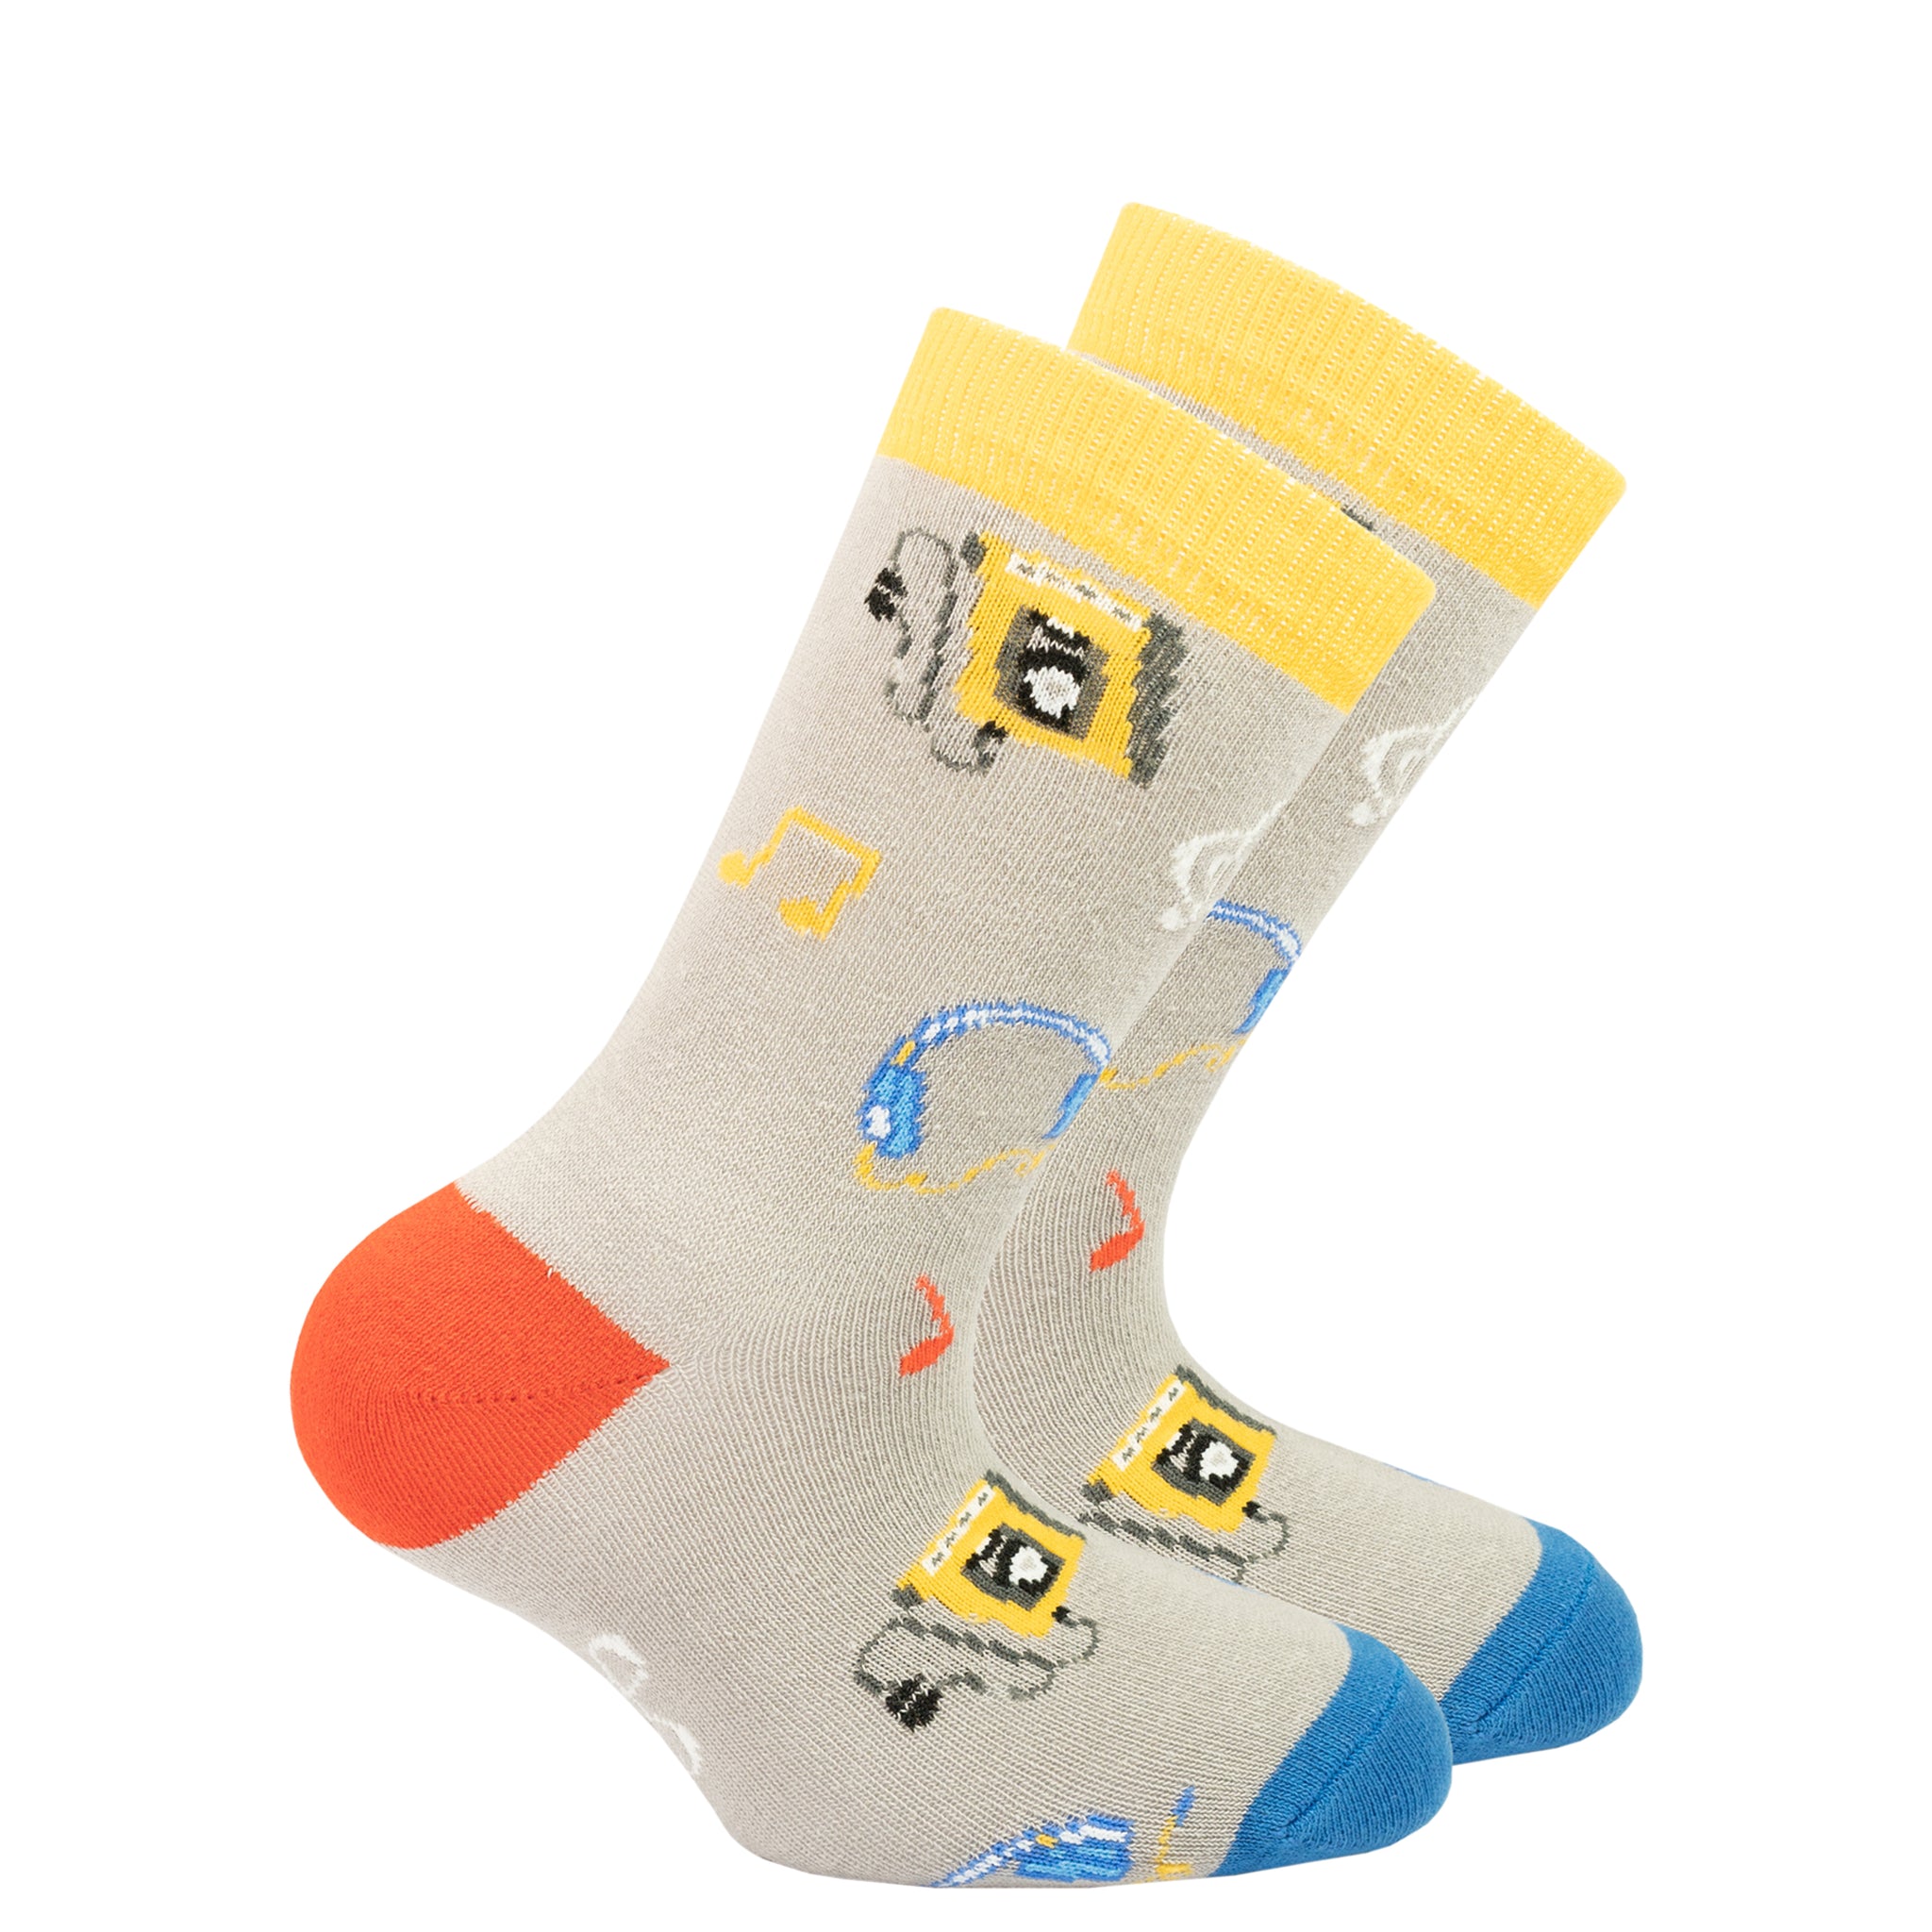 Kids Radio Socks grey and yellow